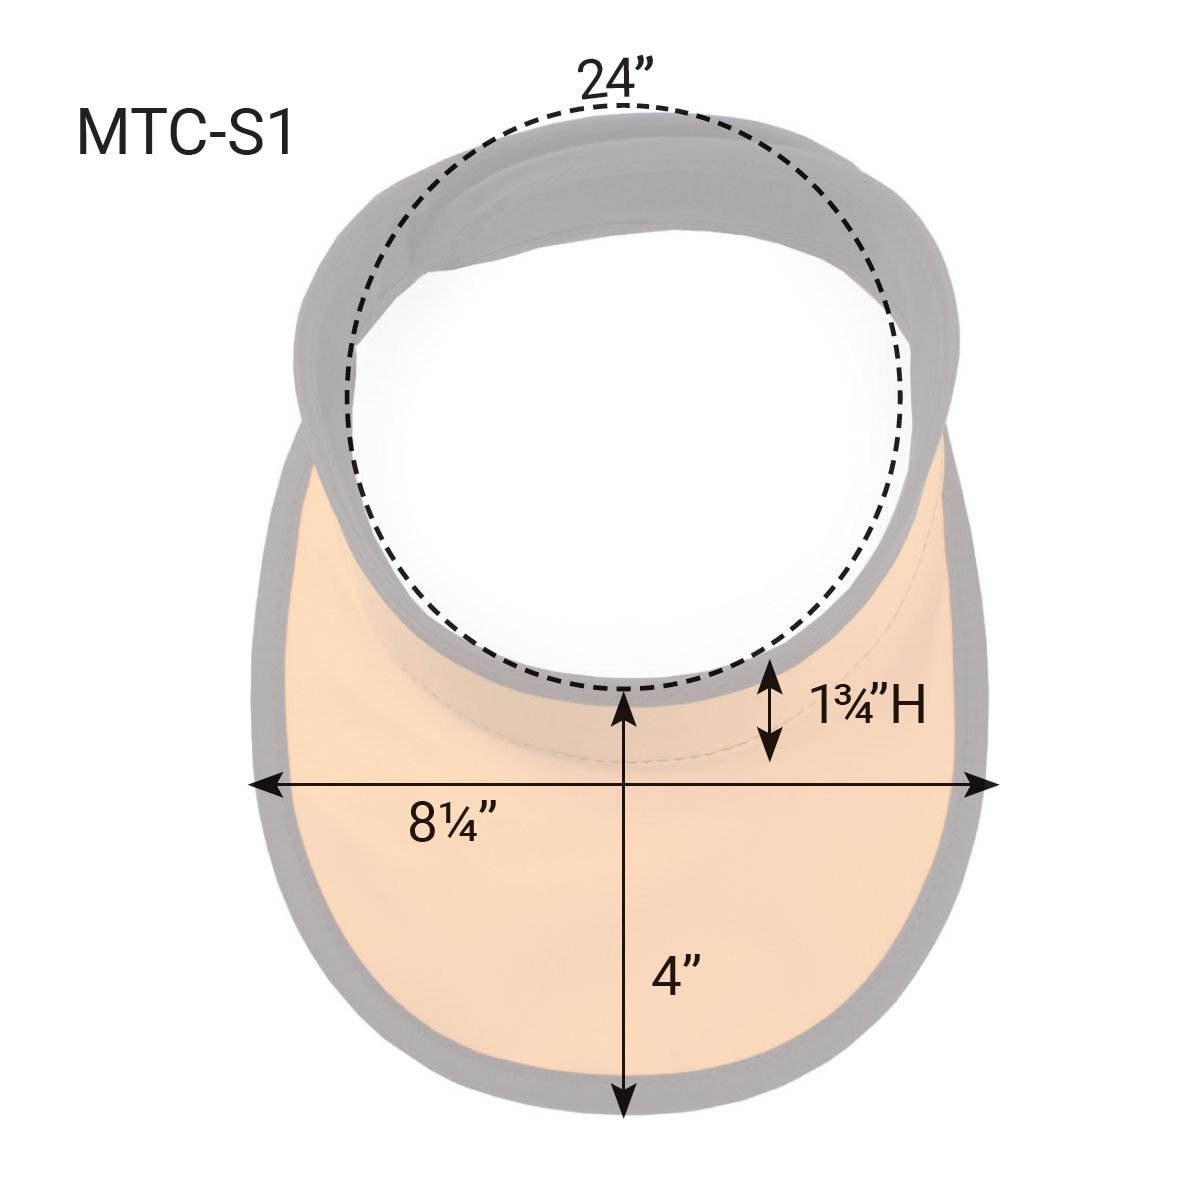 MTC-S1 Measurement